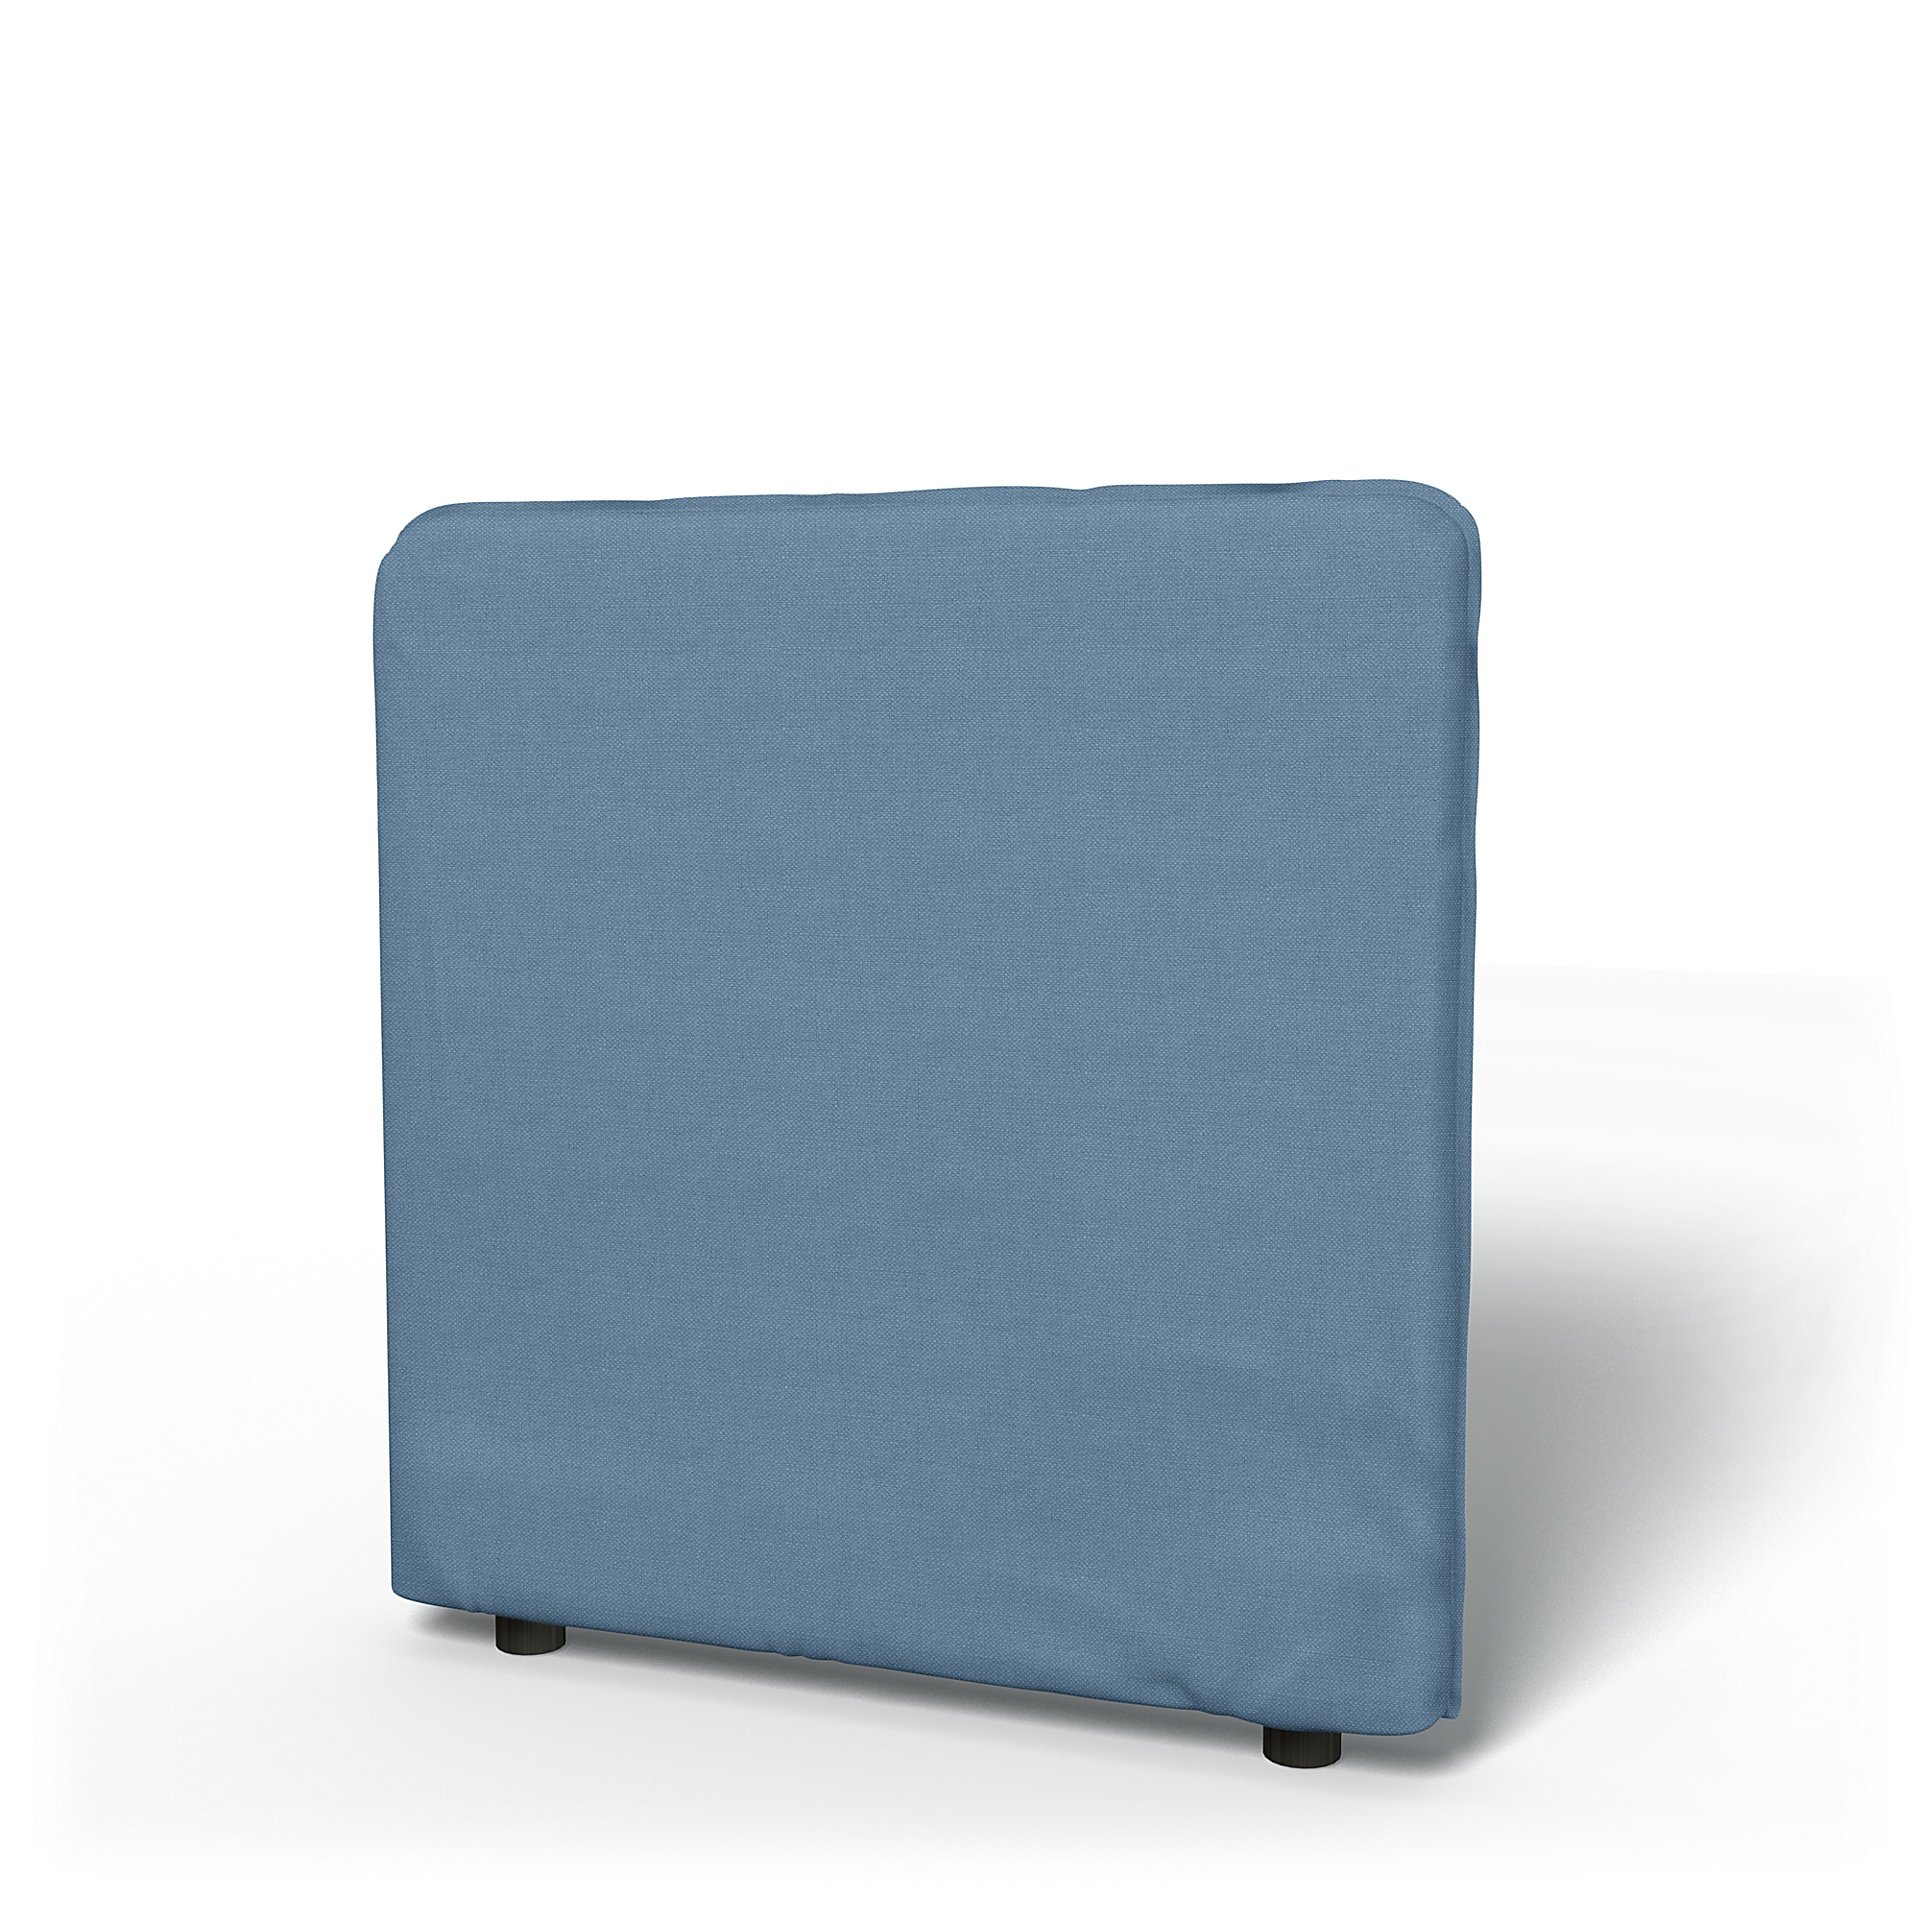 IKEA - Vallentuna Low Backrest Cover 80x80cm 32x32in, Vintage Blue, Linen - Bemz